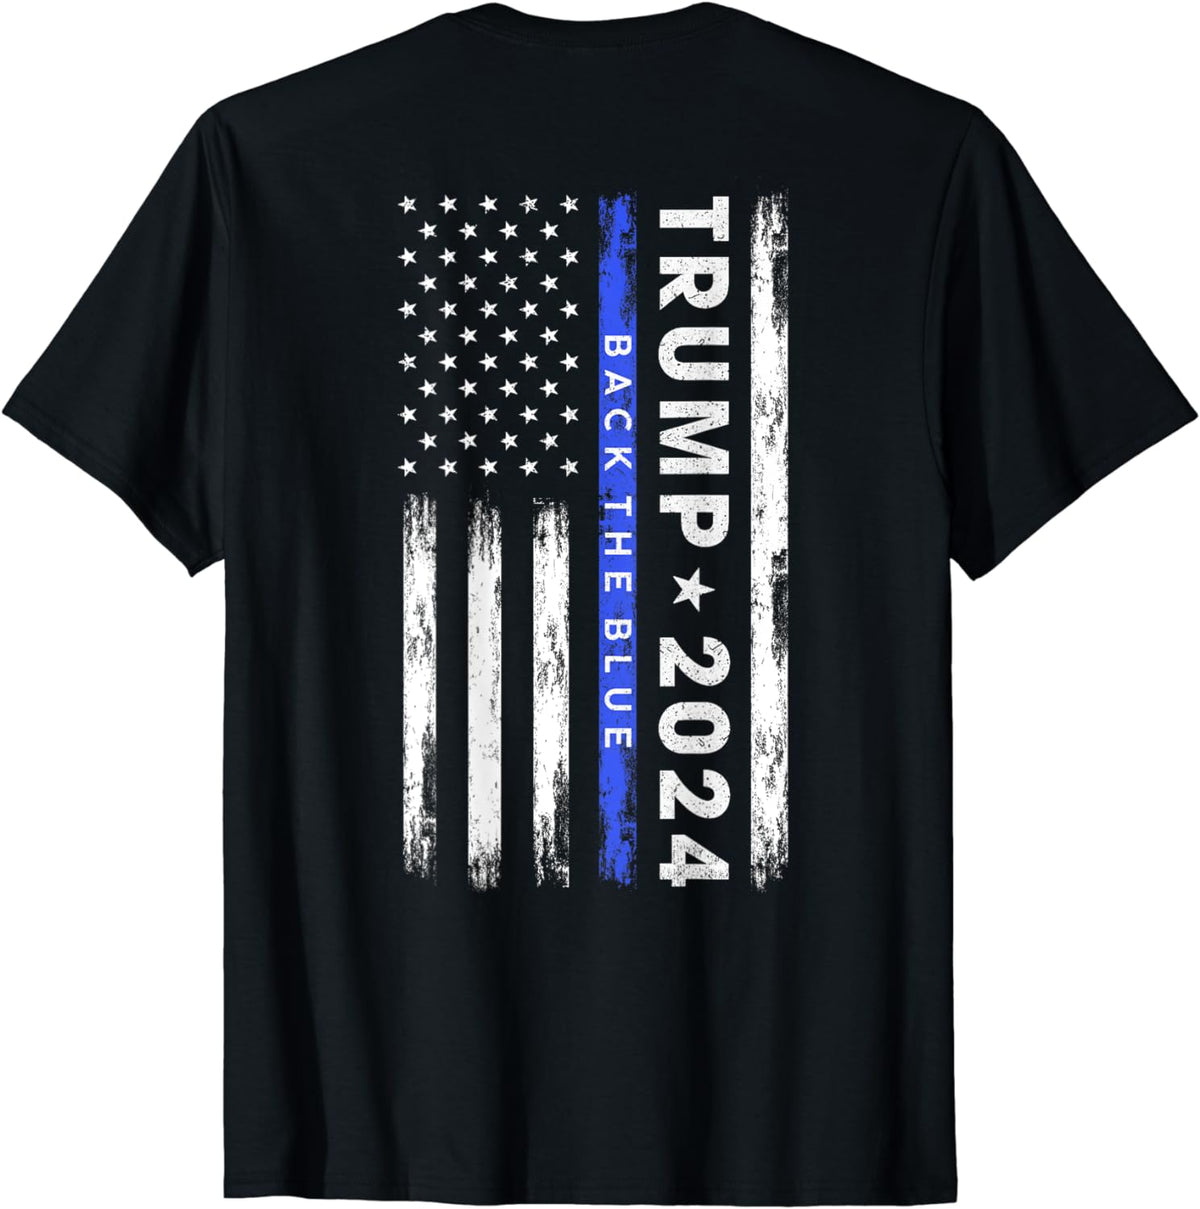 Pro Trump 2024 Back The Blue Thin Blue Line American Flag T-Shirt